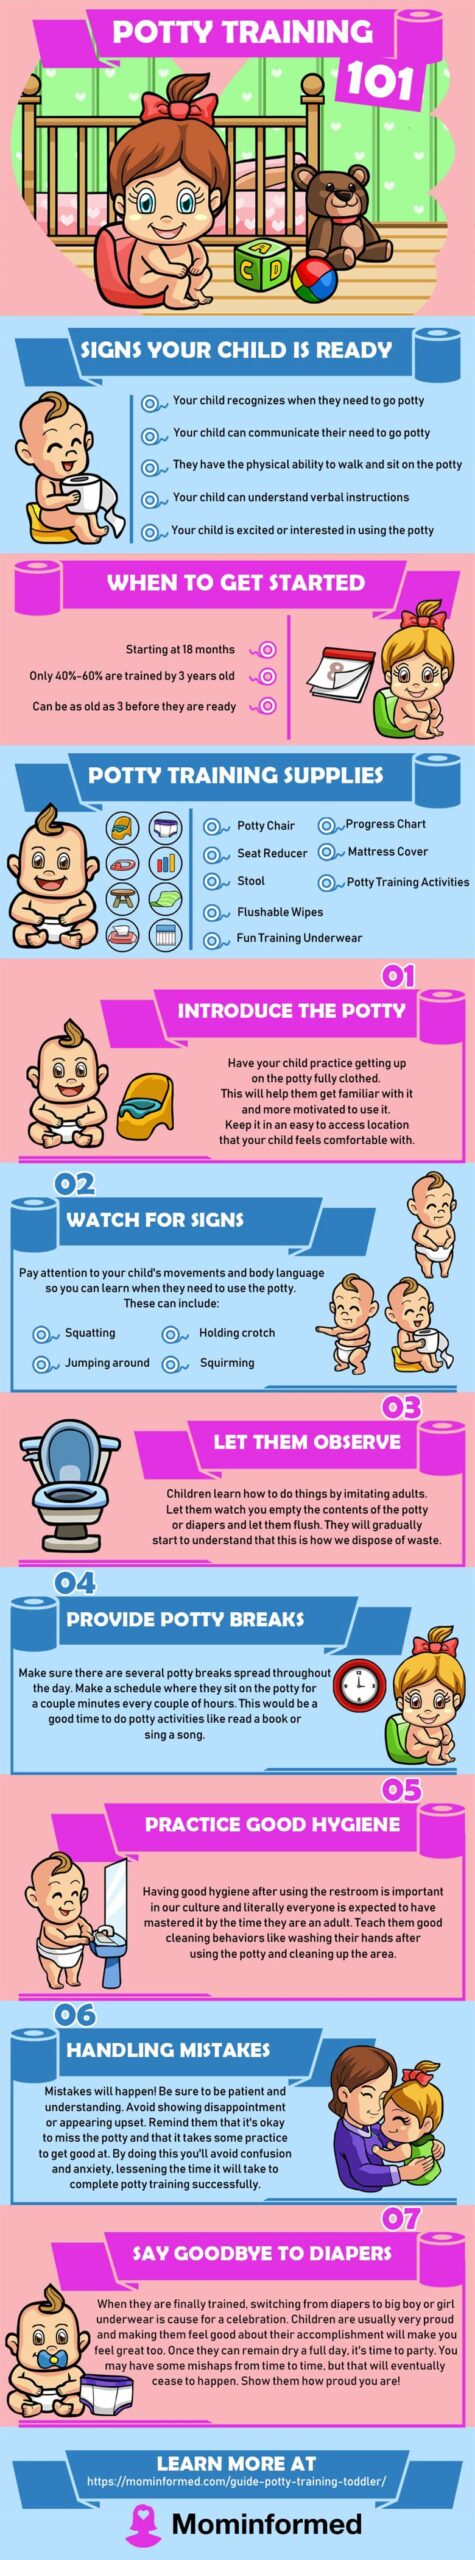 Potty Training 101 Infographic MomInformedcom-min